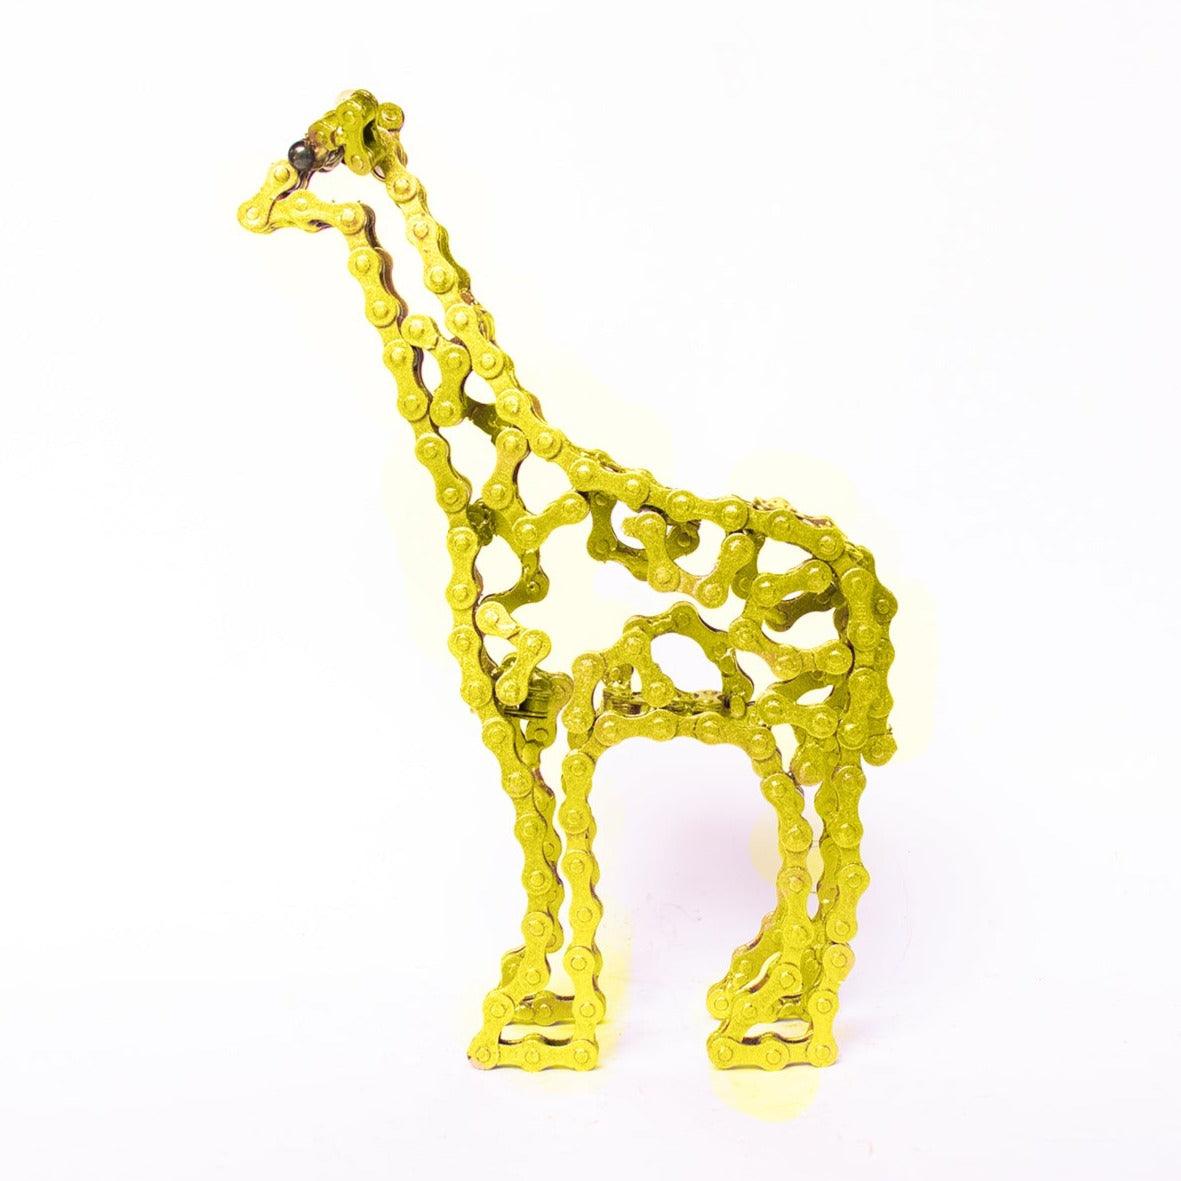 Giraffe Sculpture | UNCHAINED by NIRIT LEVAV PACKER